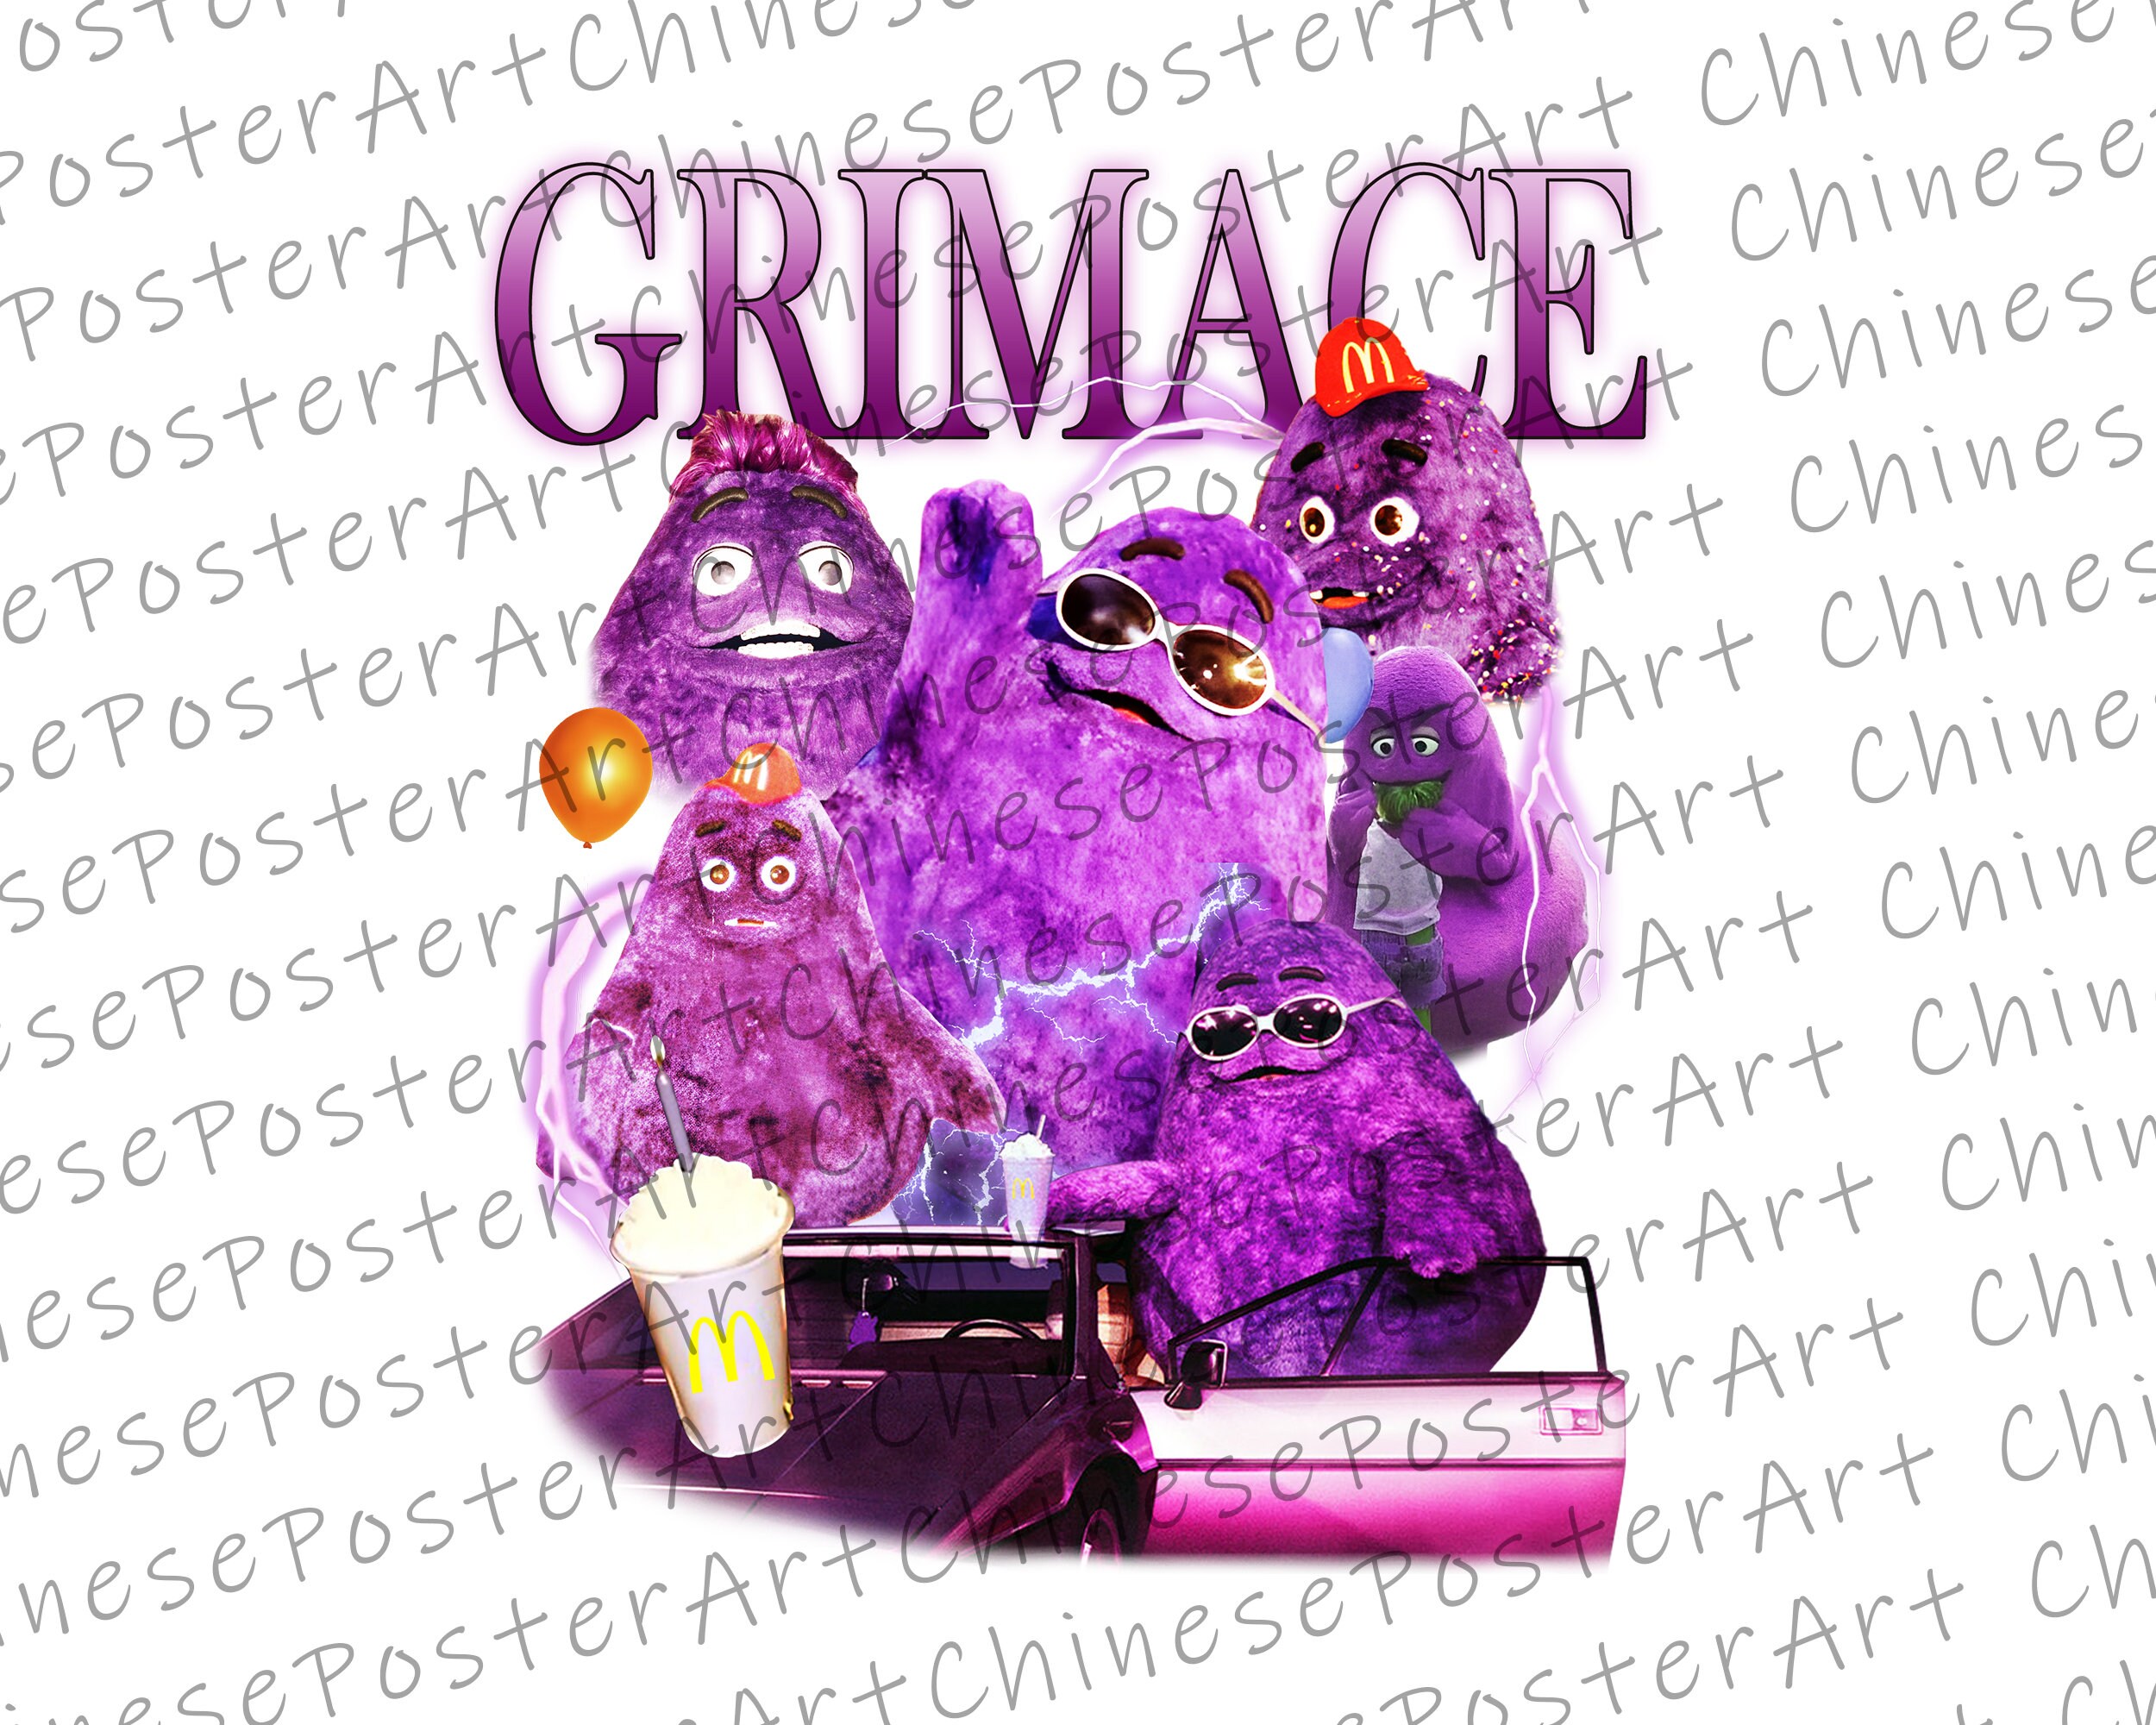 Grimace Birthday Purple Milkshake Cup Cosplay Costume Prop Kids/Adults  Halloween